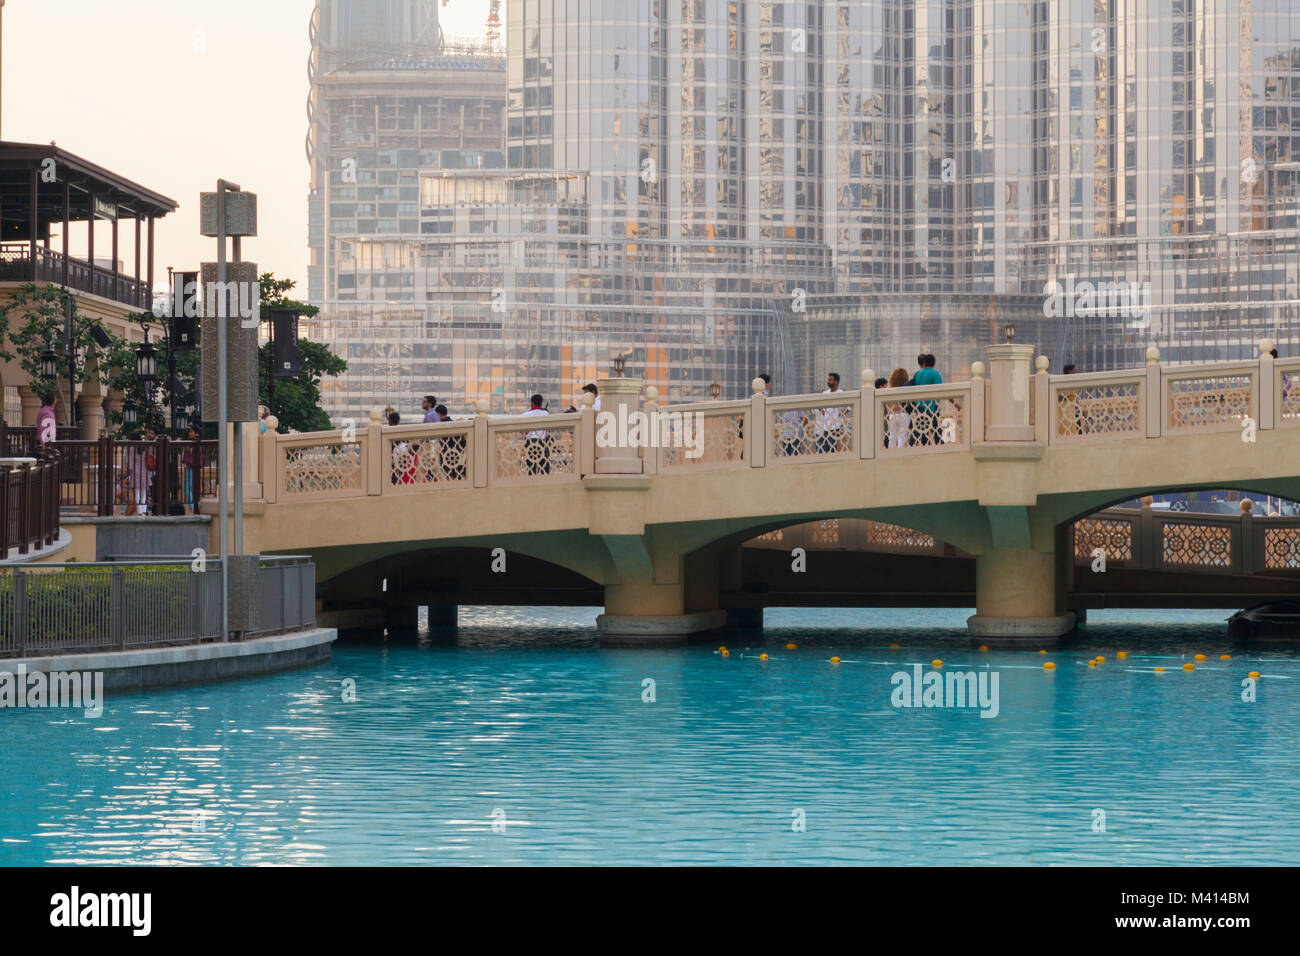 Puente sobre el río con Burj en segundo plano conocido como el Burj Dubai, un rascacielos megatall en Dubai, Emiratos Árabes Unidos, EAU Foto de stock